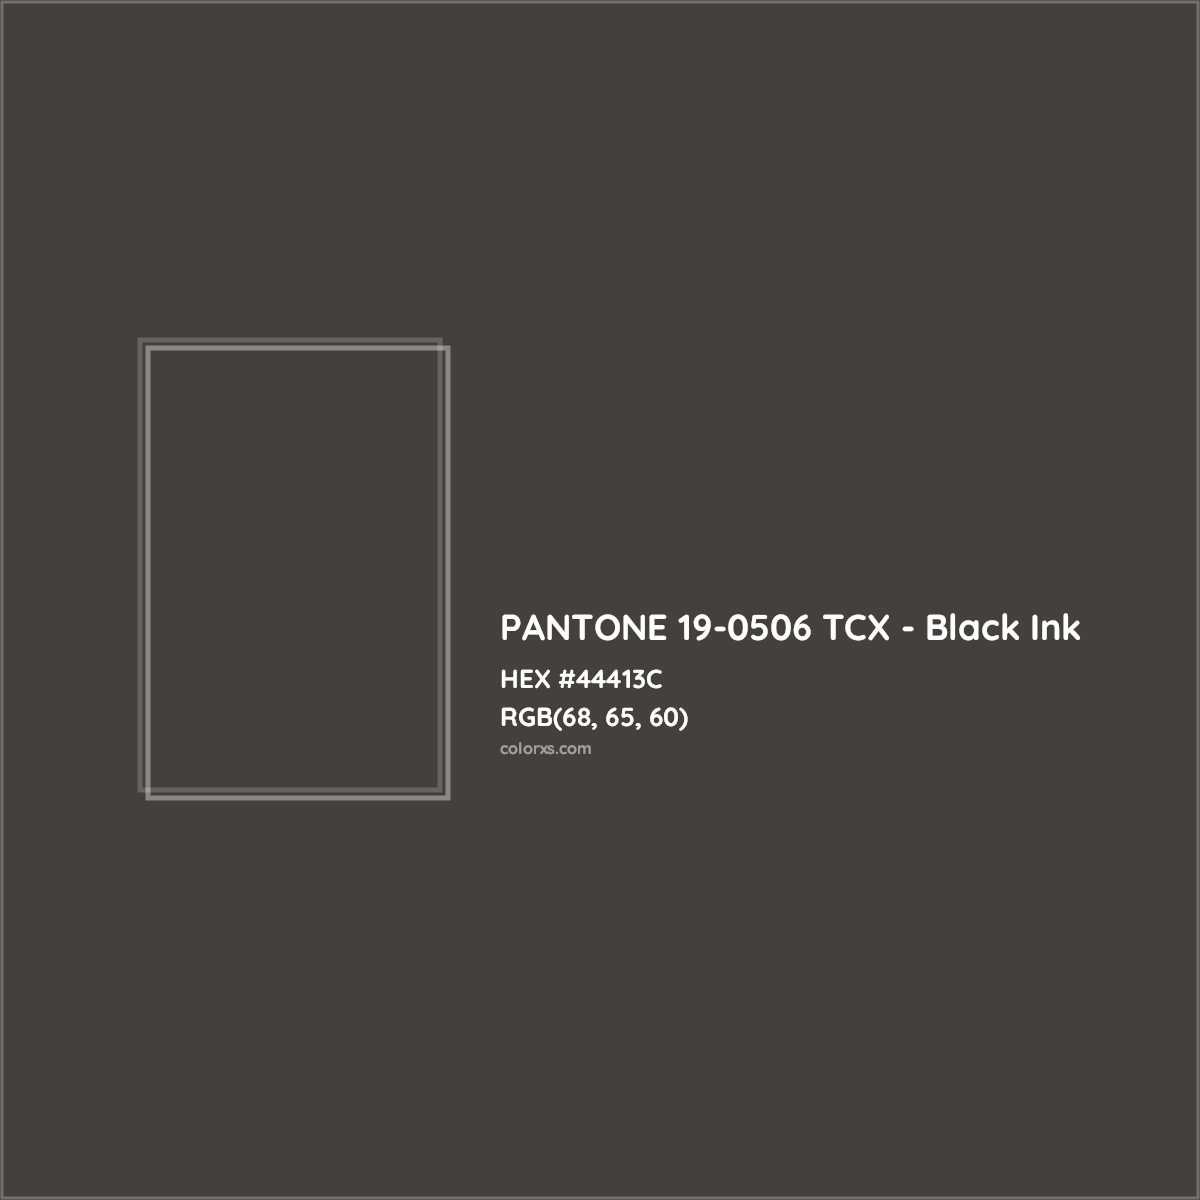 HEX #44413C PANTONE 19-0506 TCX - Black Ink CMS Pantone TCX - Color Code